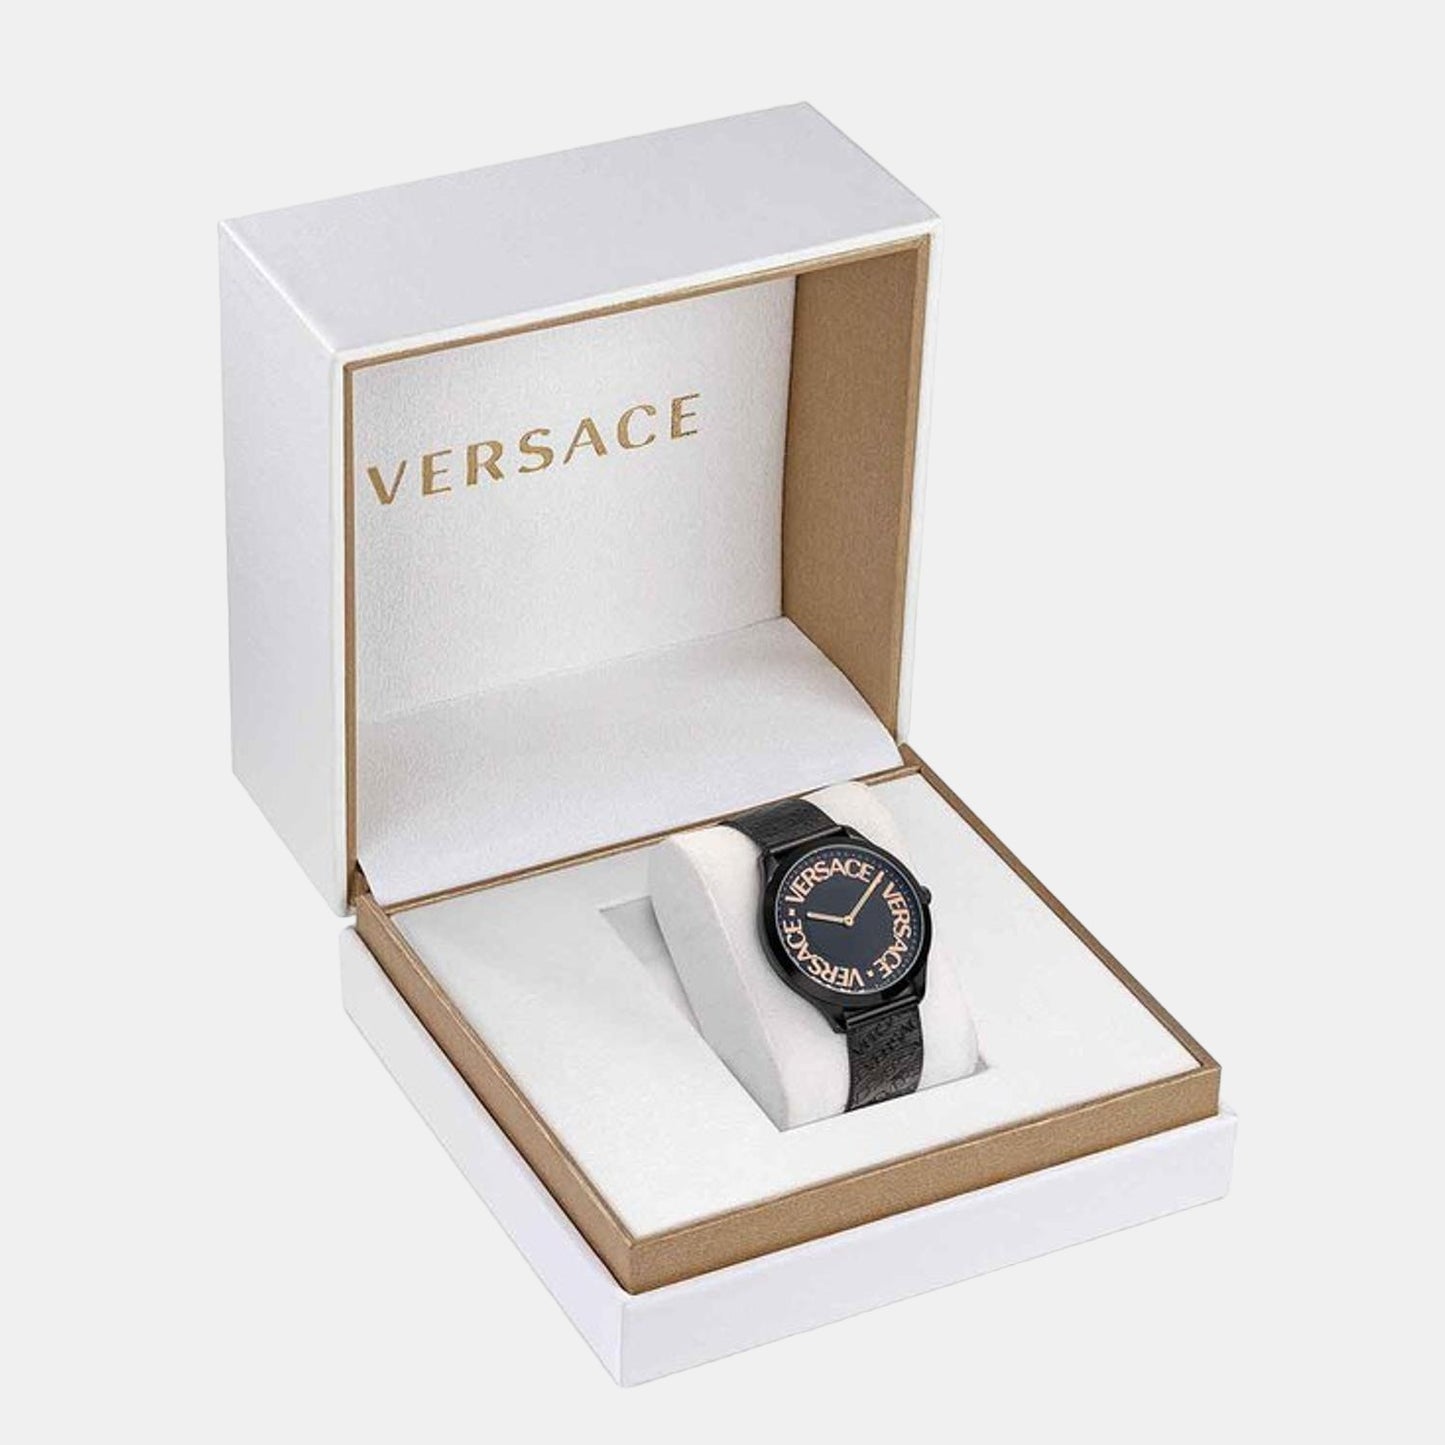 versace-stainless-steel-black-analog-women-watch-ve2o00622